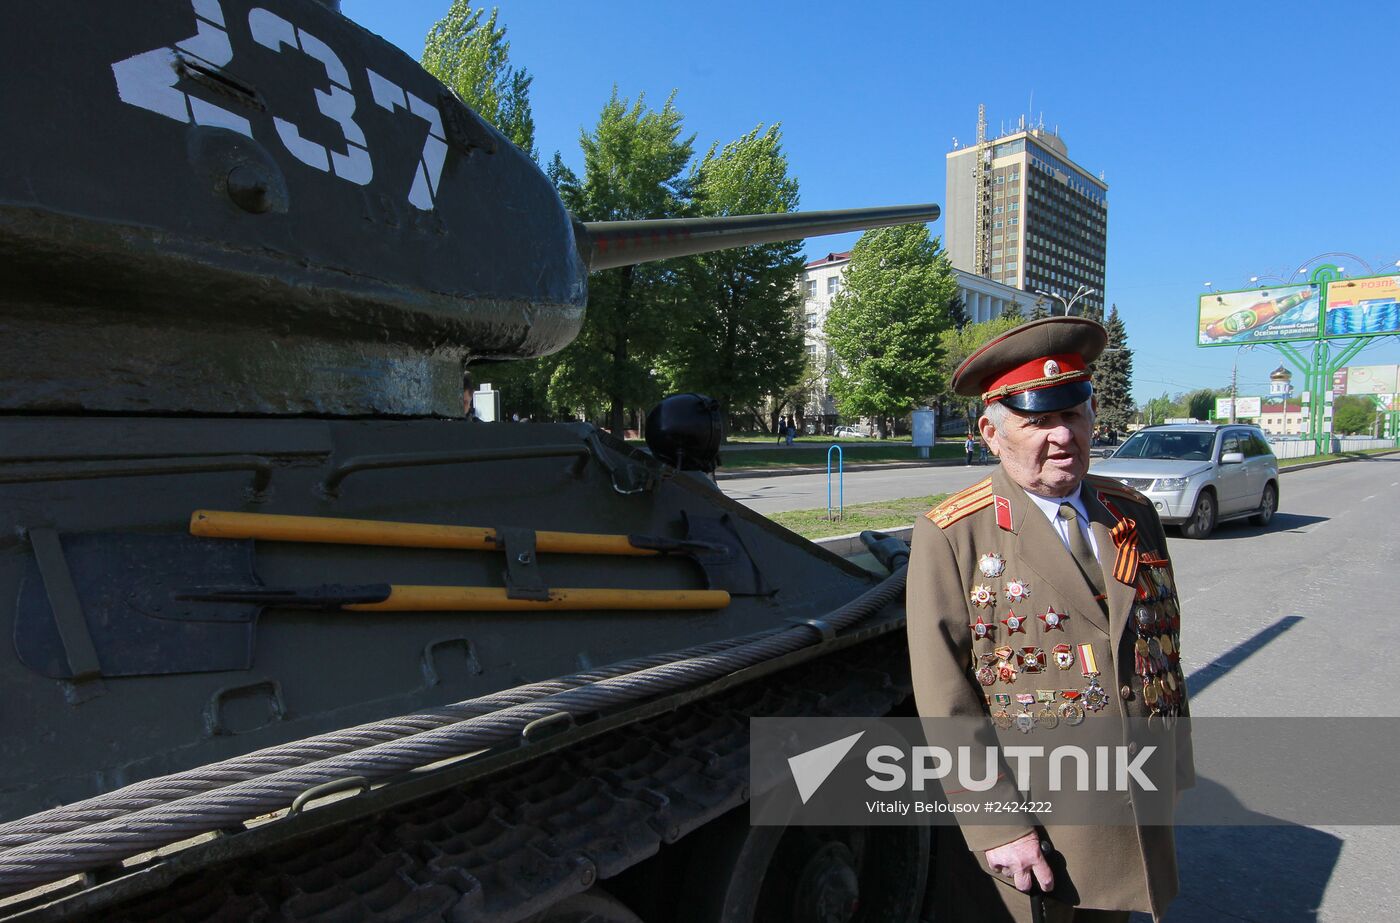 T-34 tank restored in Lugansk